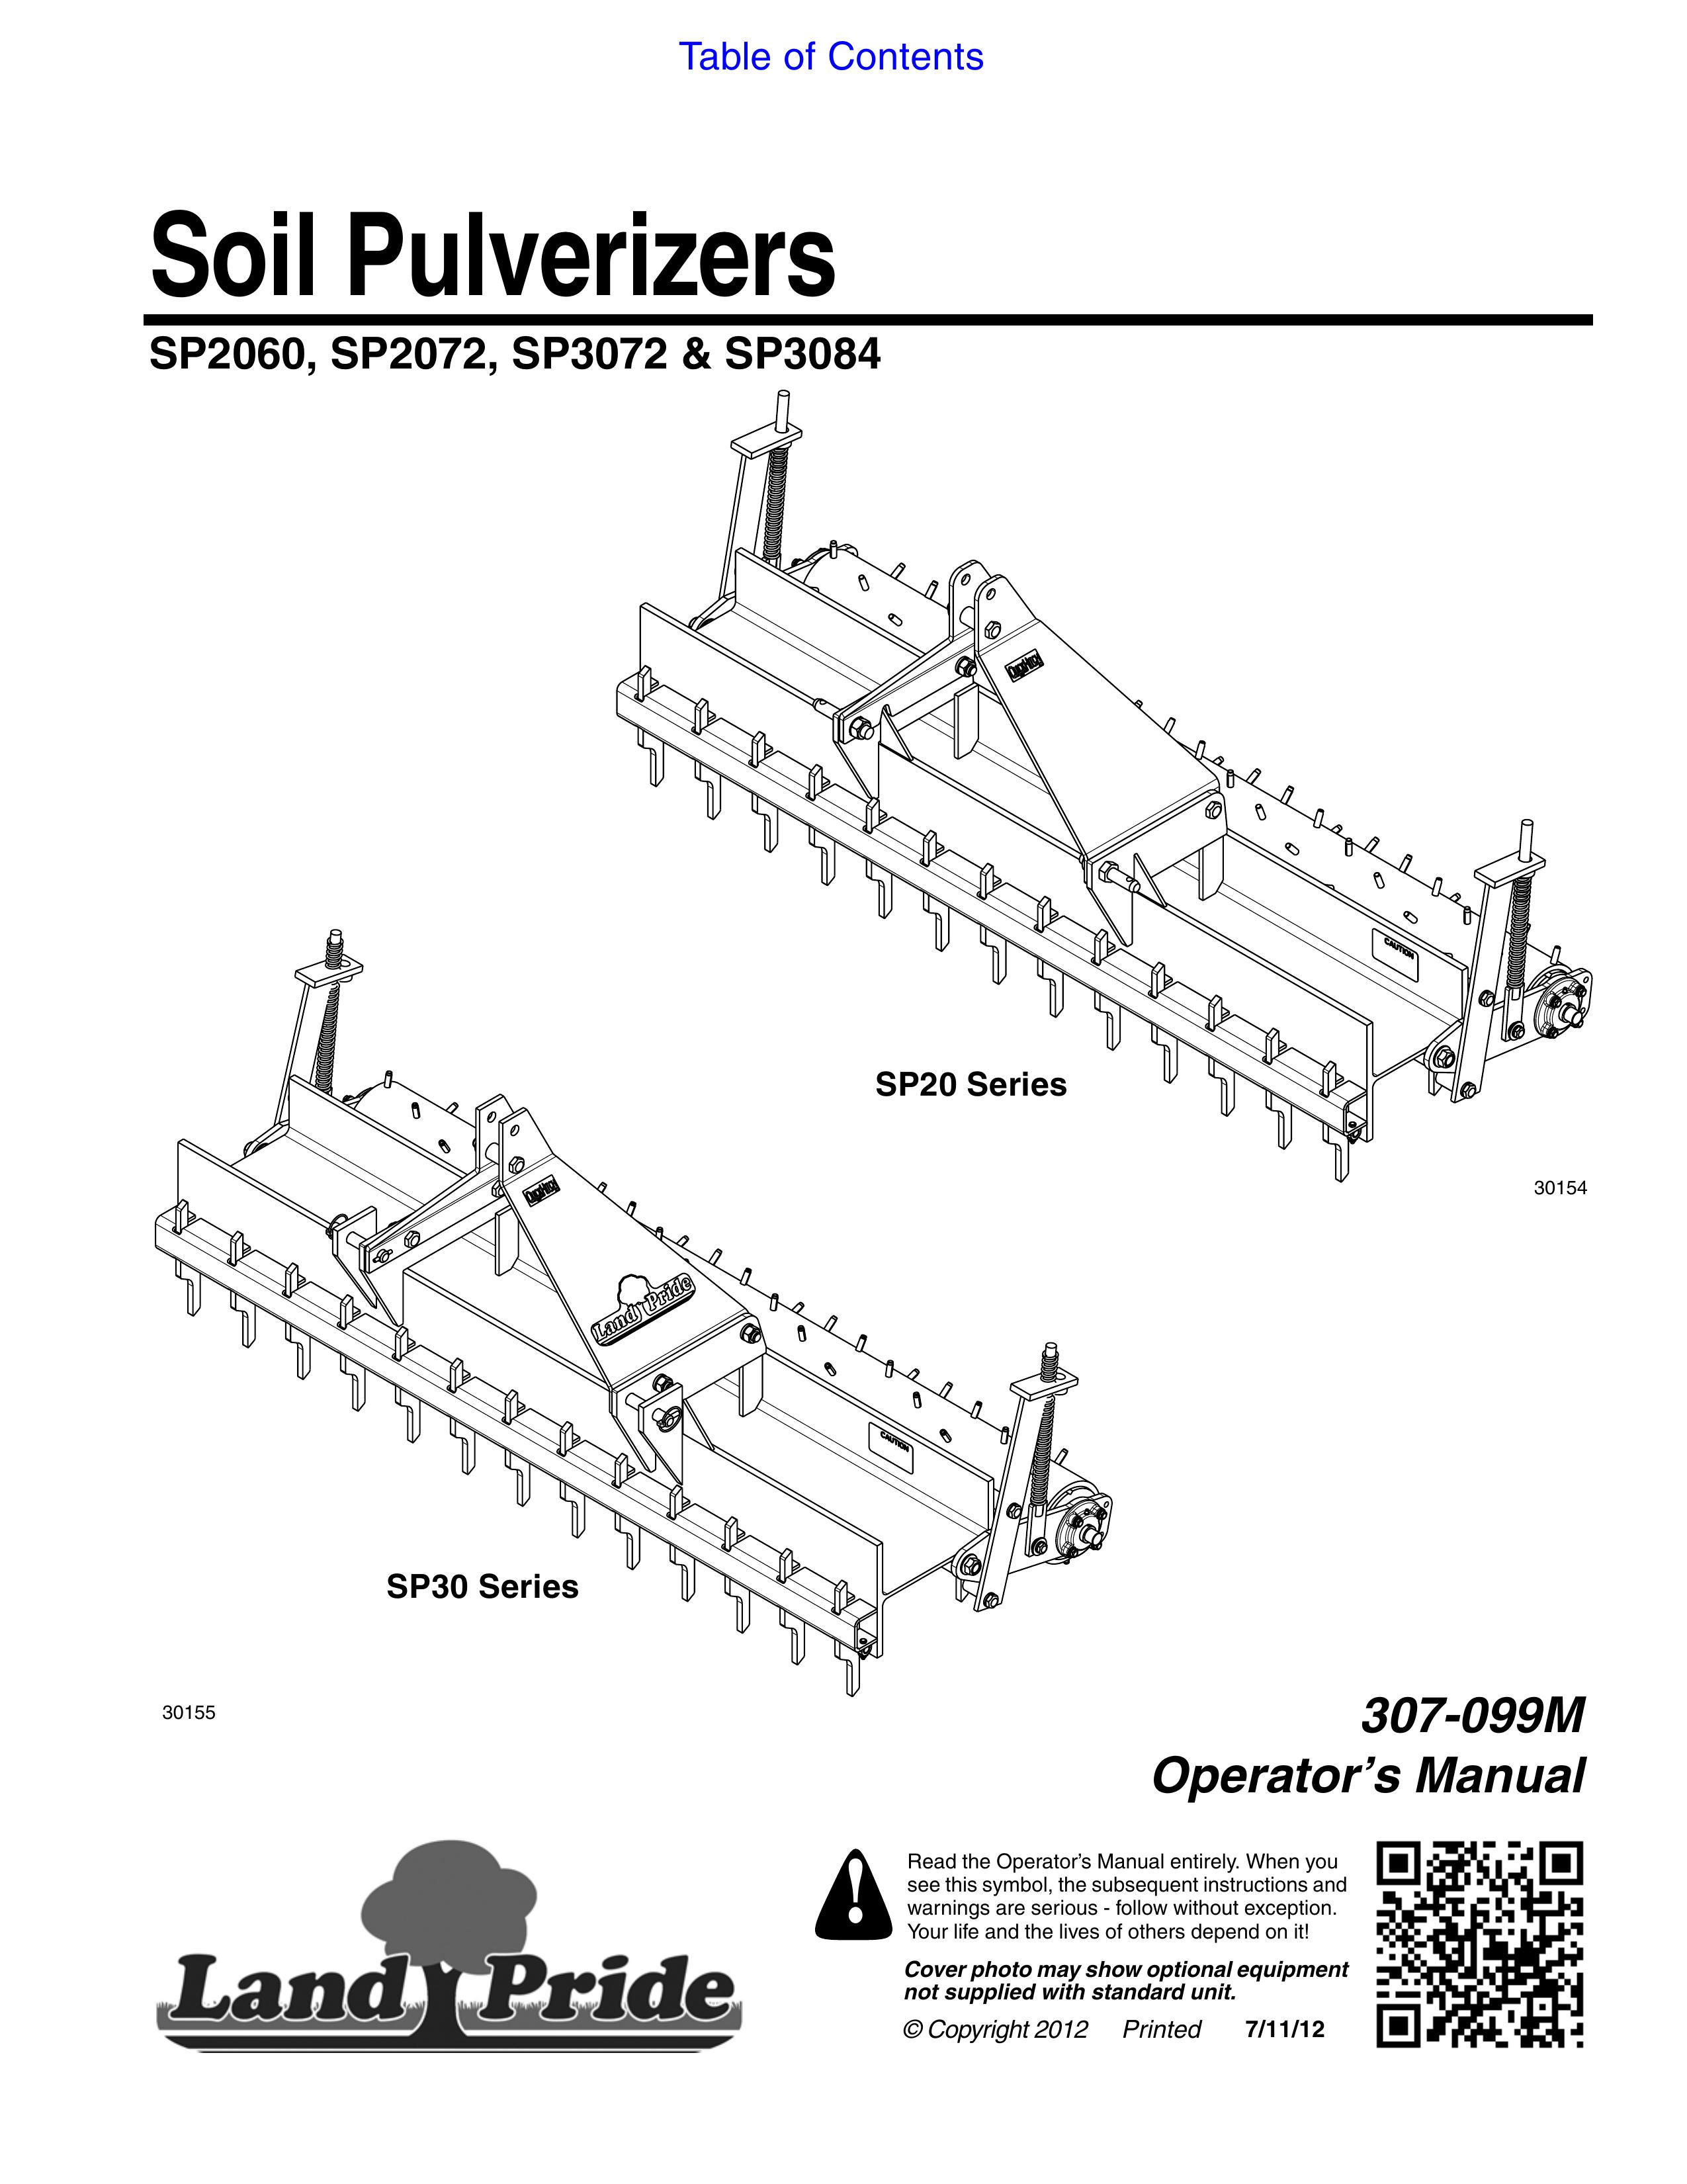 Land Pride SP2060 Lawn Aerator User Manual